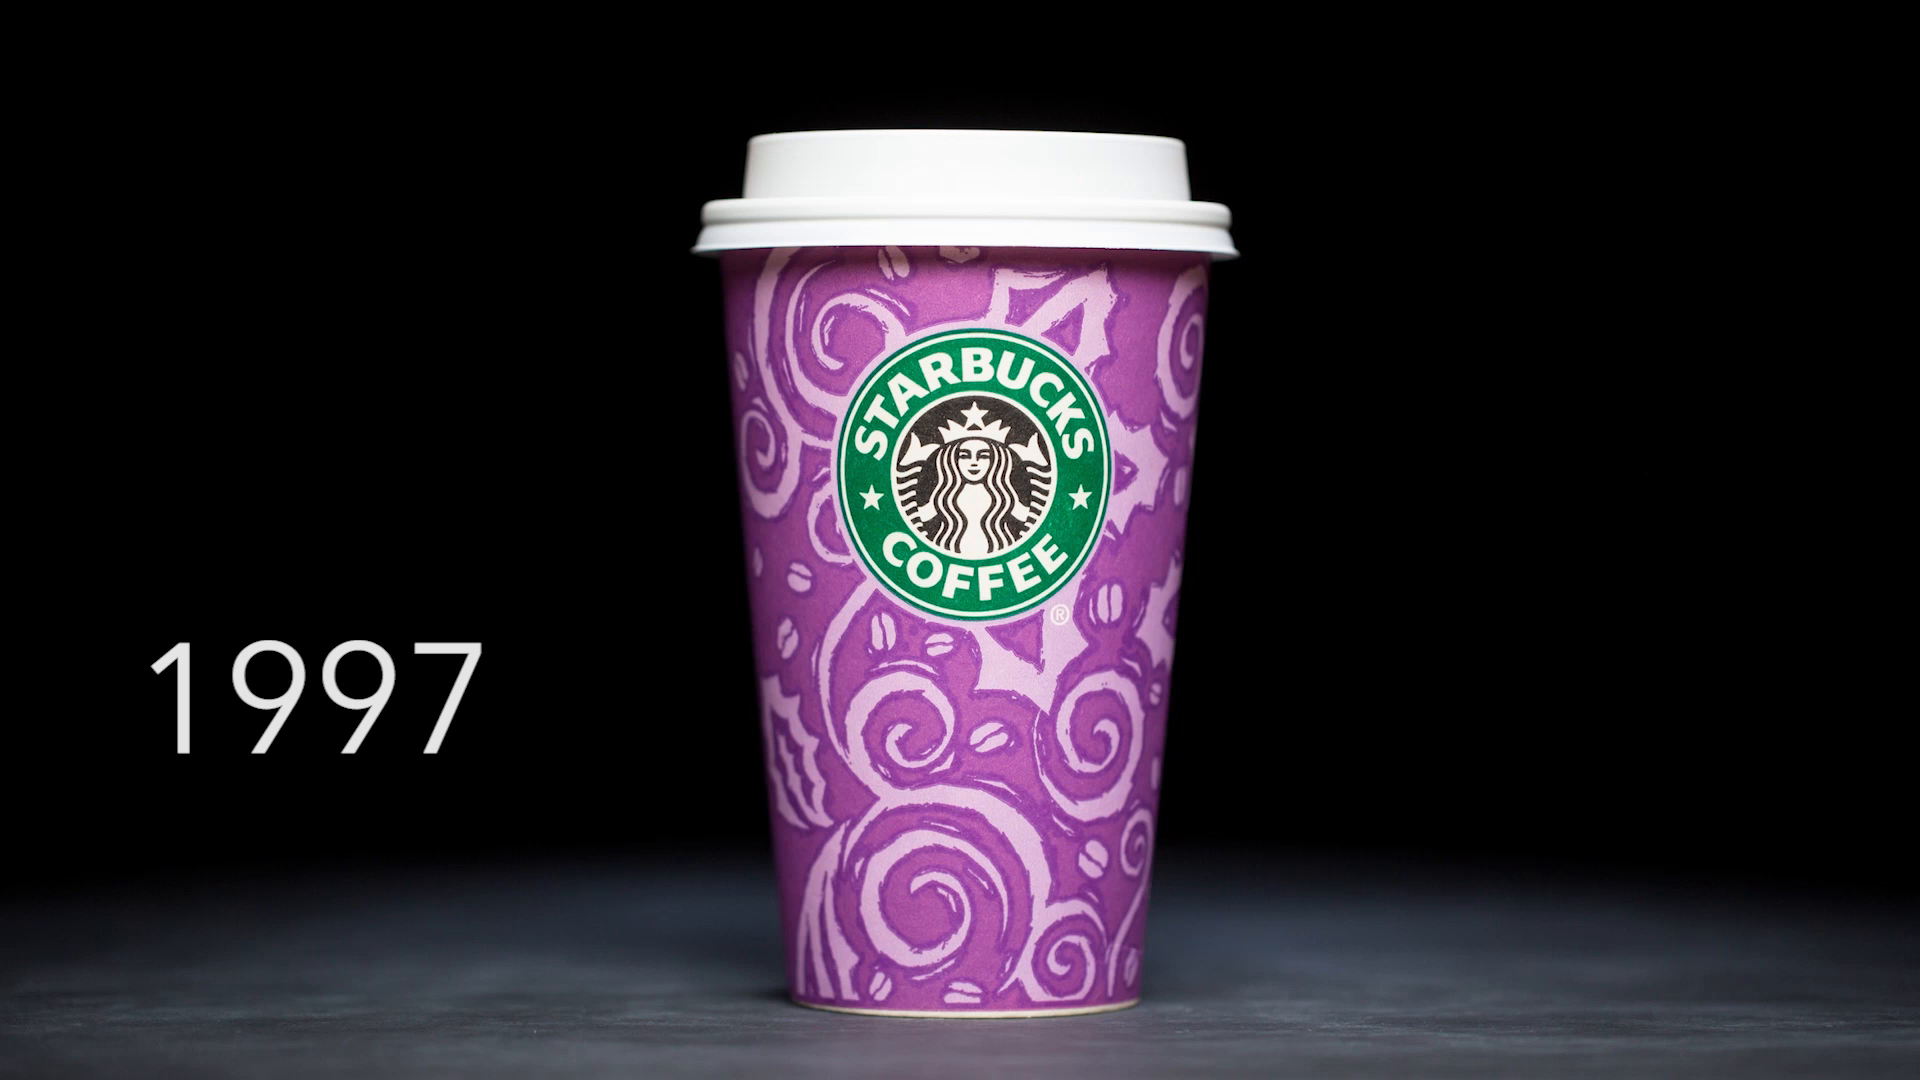 Starbucks Coffee Calories Sabotage Diet - Weight Loss Resources